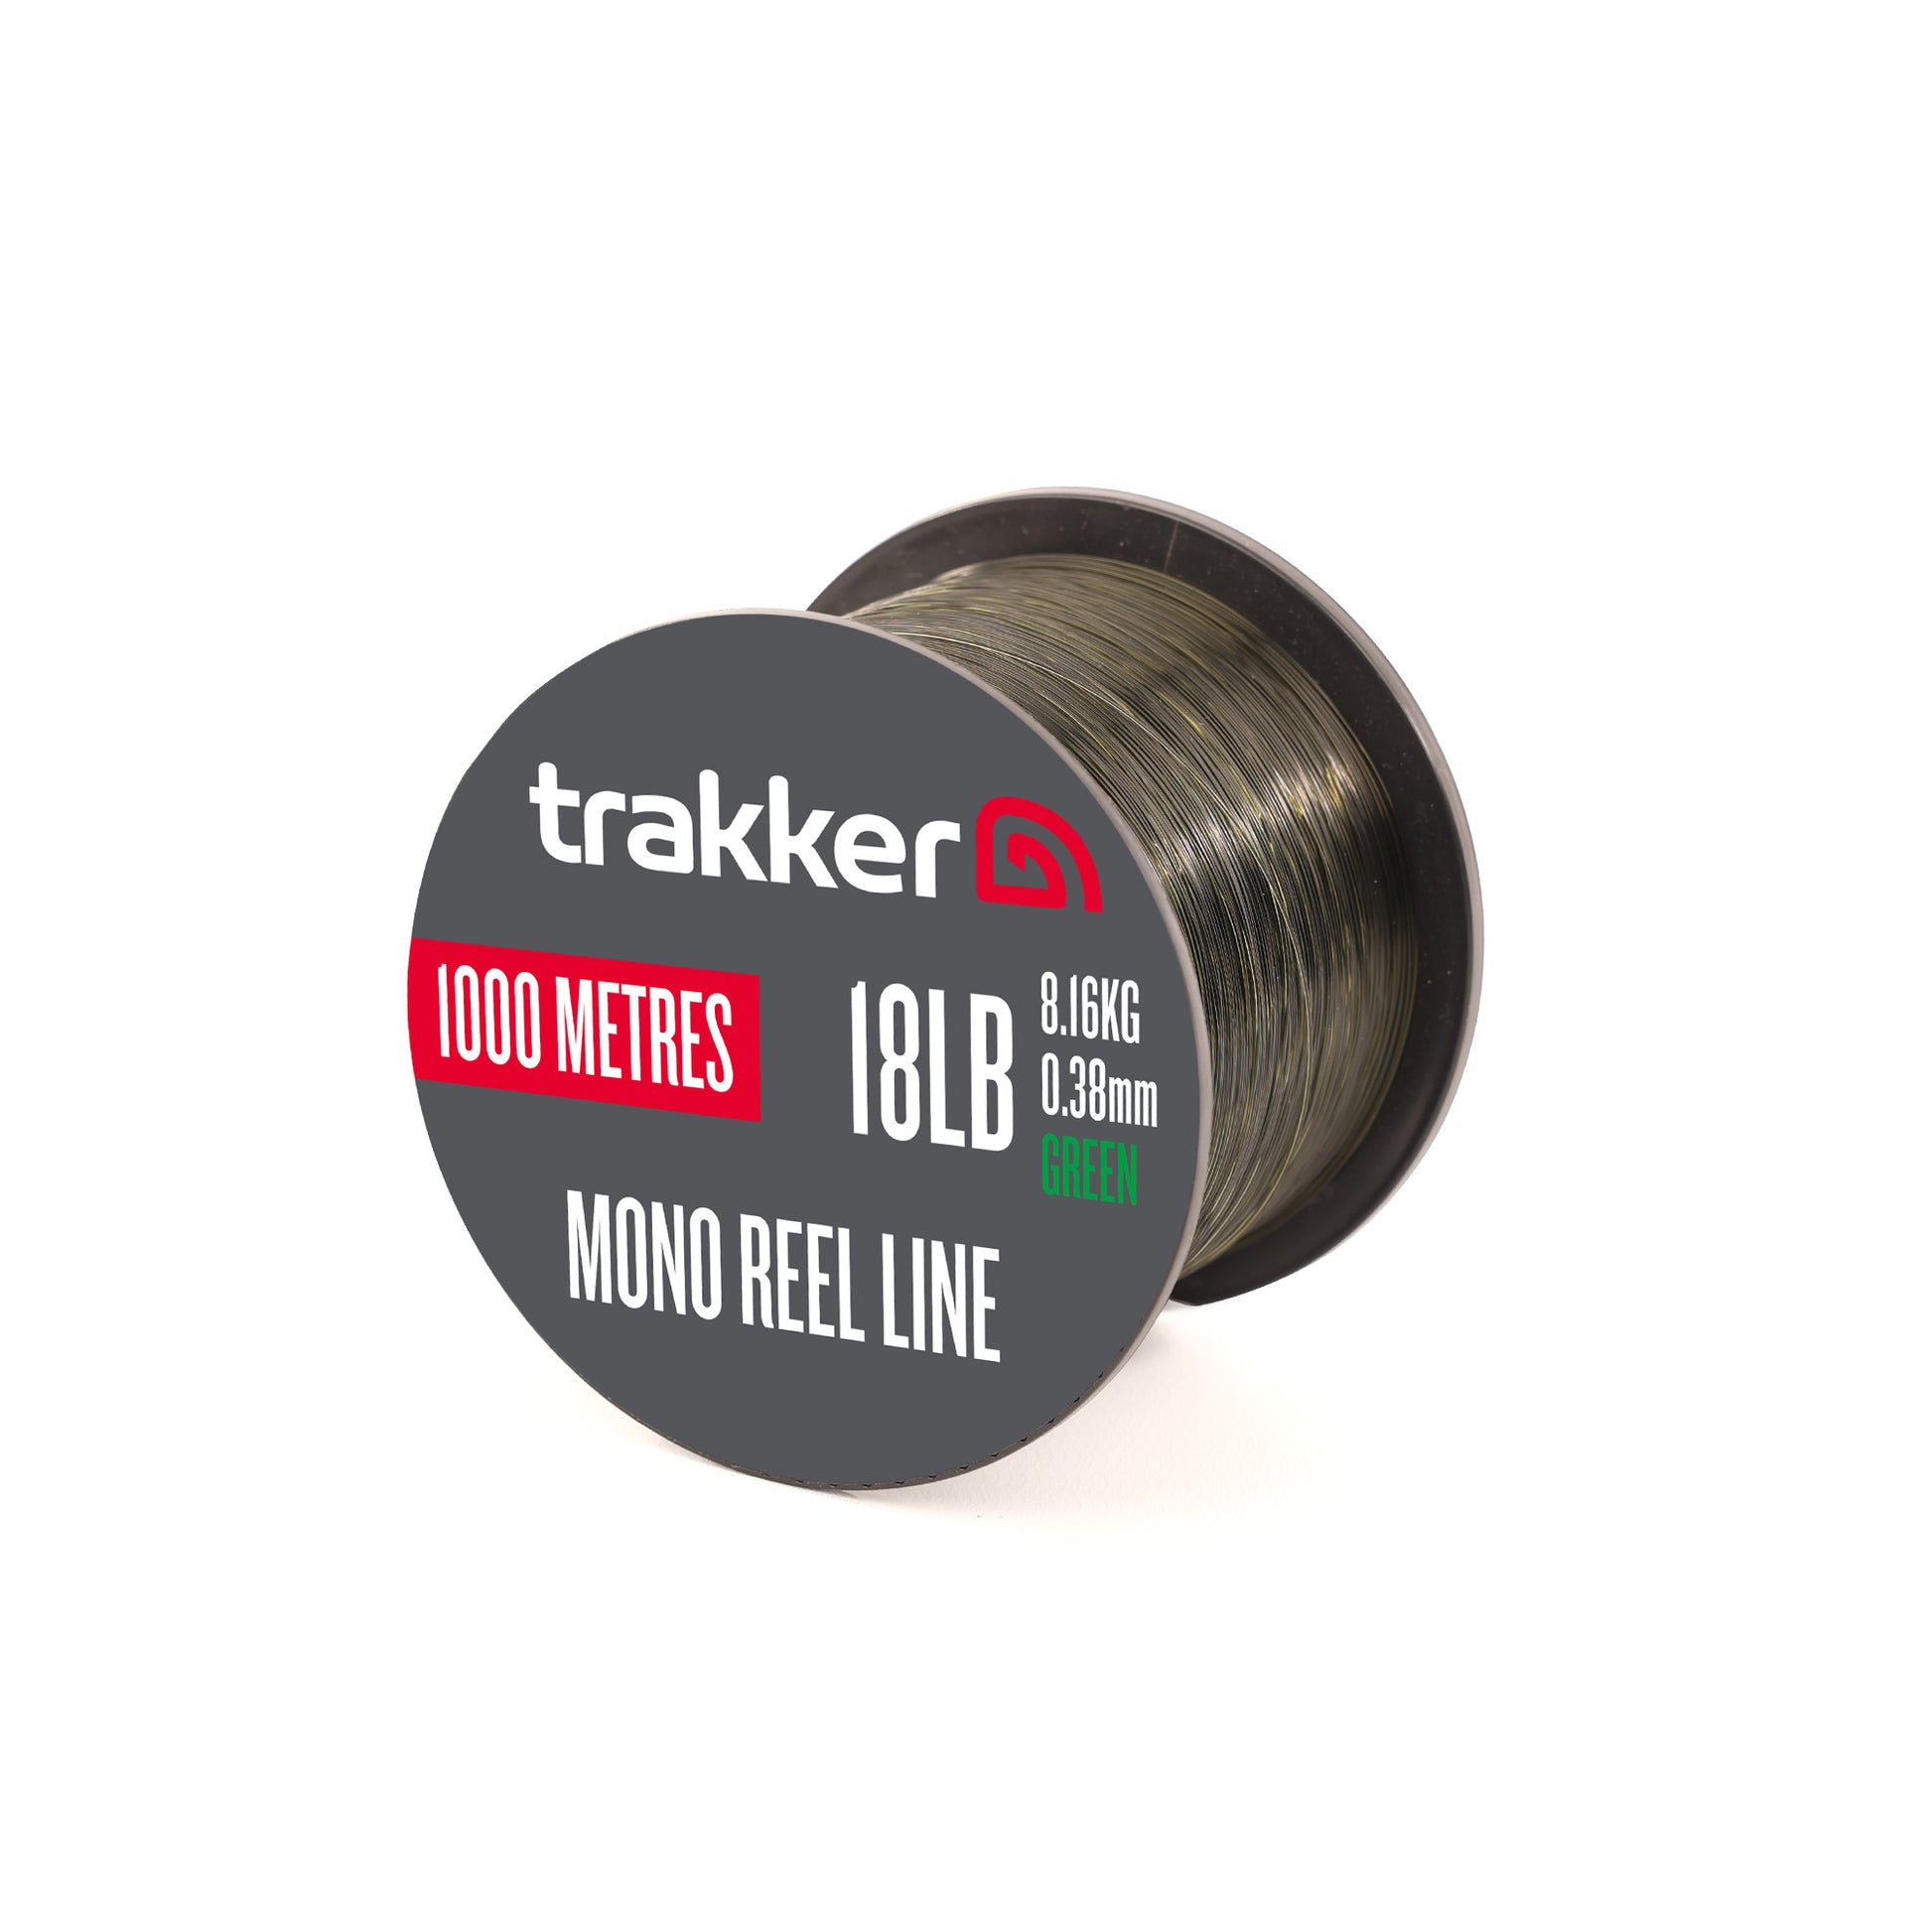 TRAKKER TRAKKER Mono Reel Line (1000m) TRAKKER Mono Reel Line (18lb)(8.16kg)(0.38mm)(1000m) - Parkfield Angling Centre